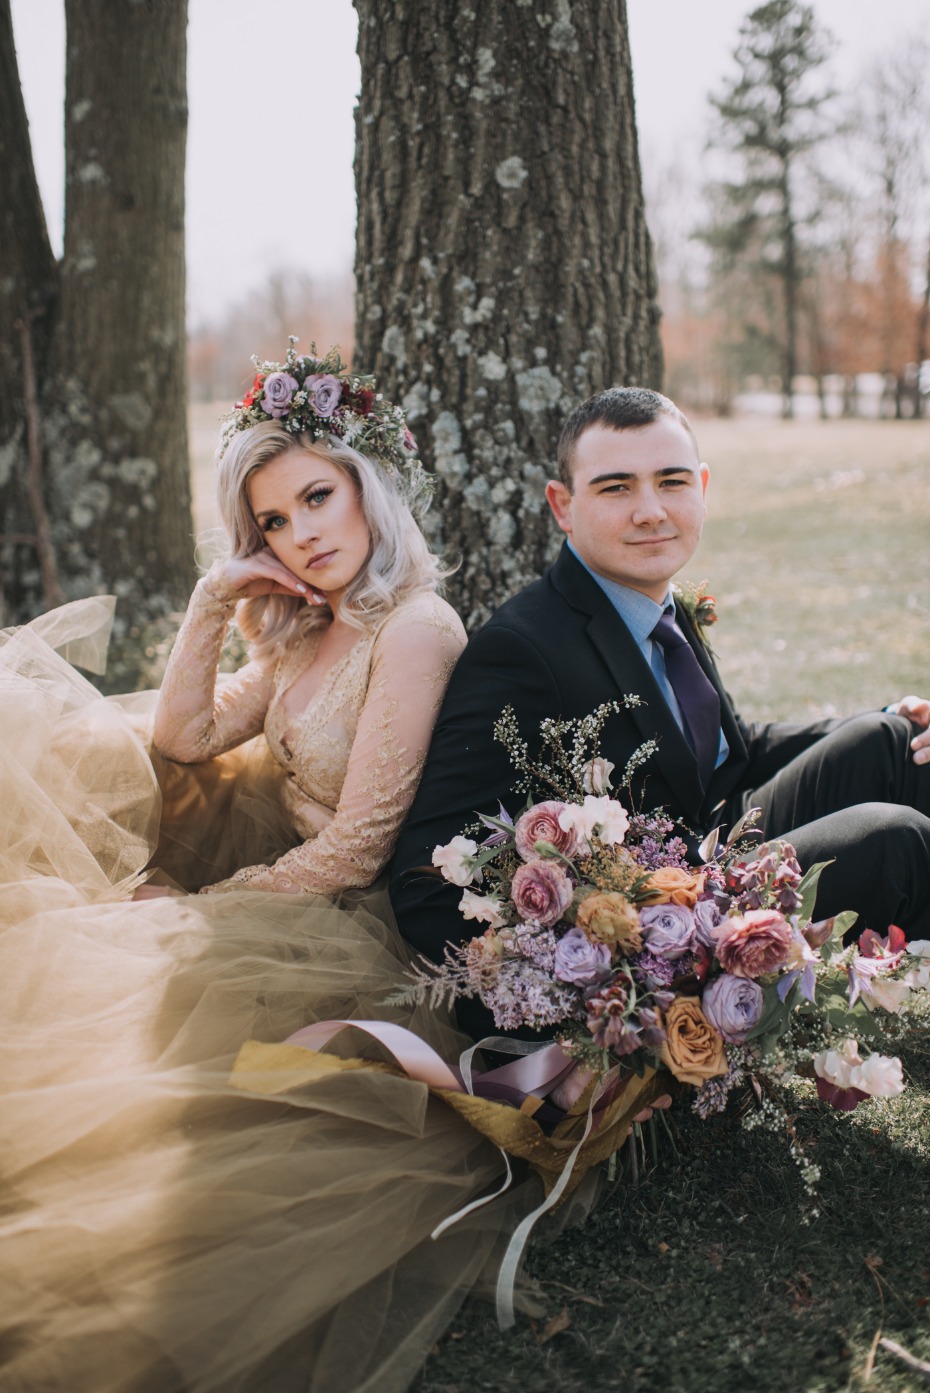 Springtime wedding inspiration in gold and lavender